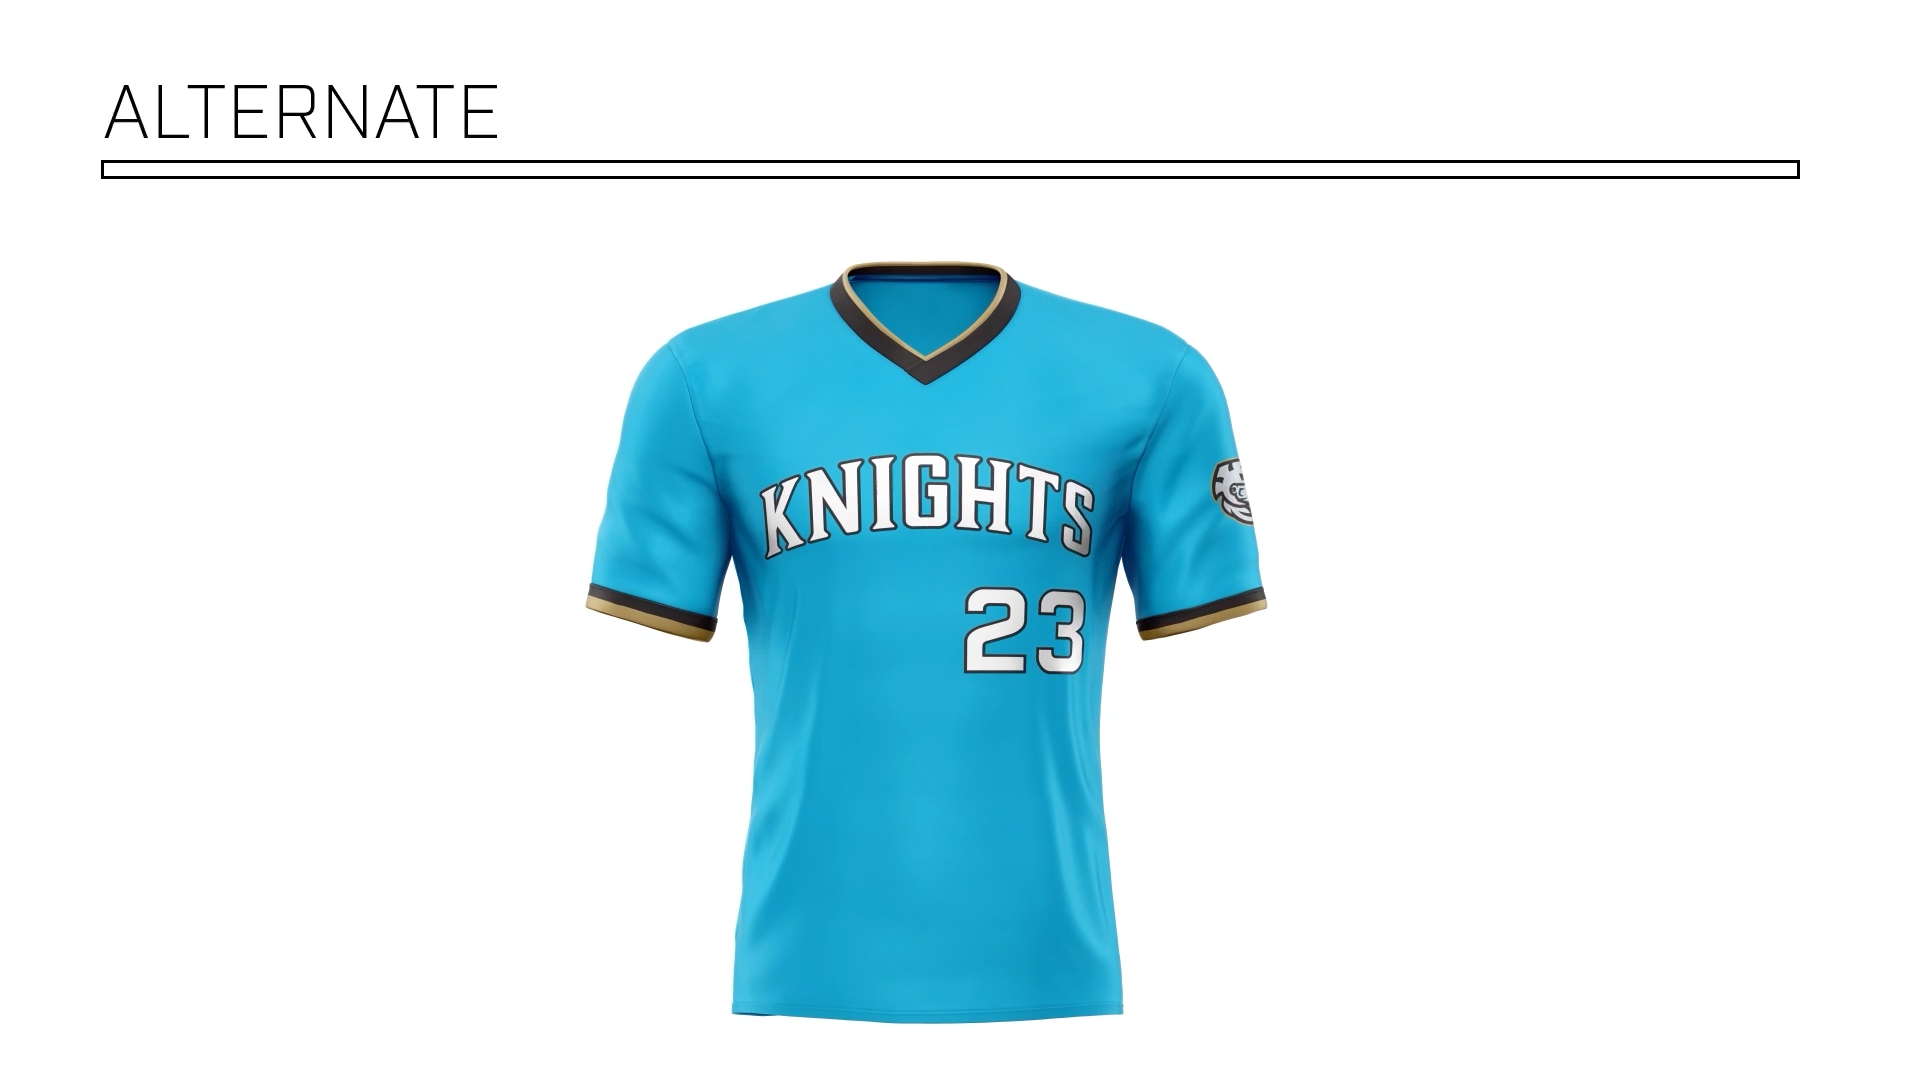 Charlotte Knights unveil new logo, uniforms